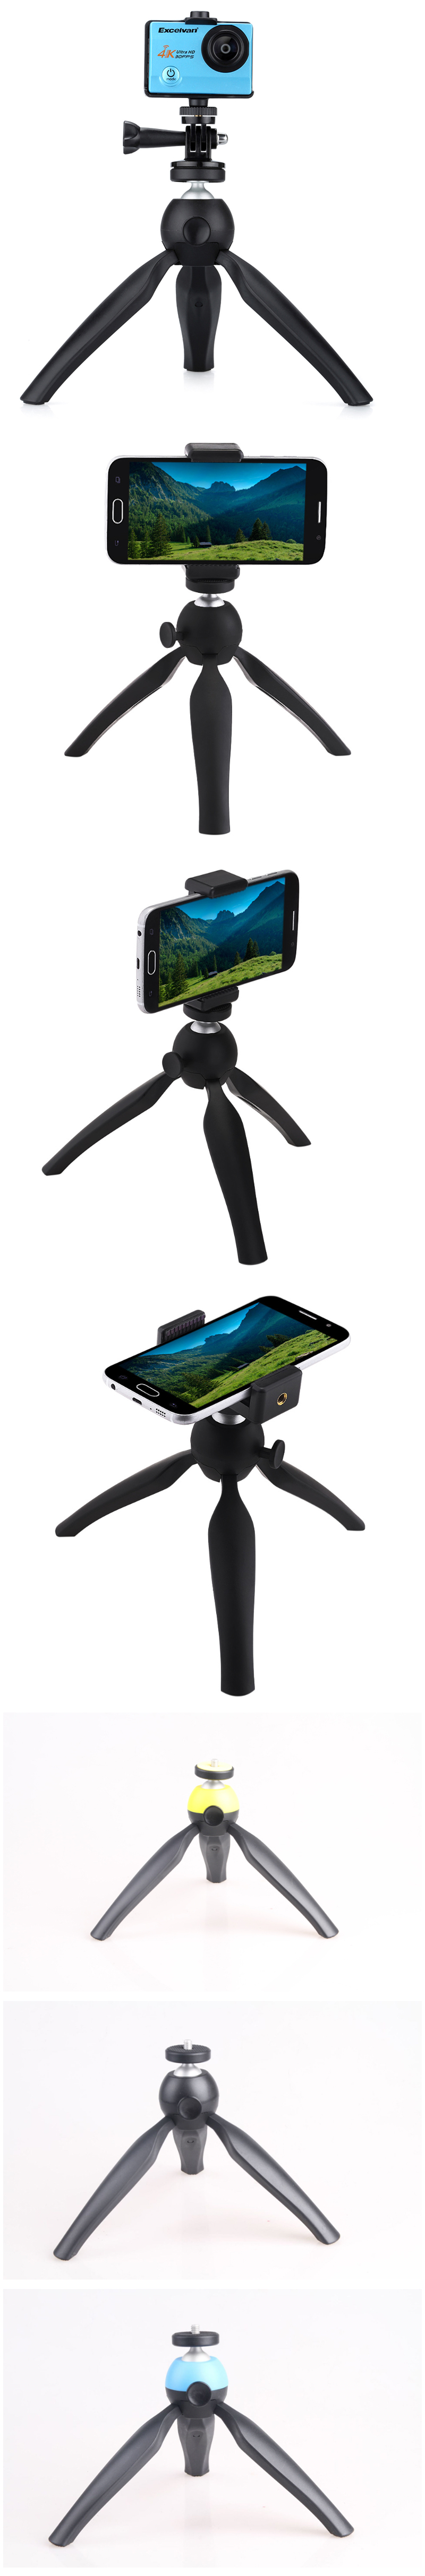 K3 Mini Tripod for Smartphone&Phone Holder Stand Mount for iPhone X 7 Canon Nikon Gopro Portable Selfie Camera Monopod Accessory Projector Tripod 17